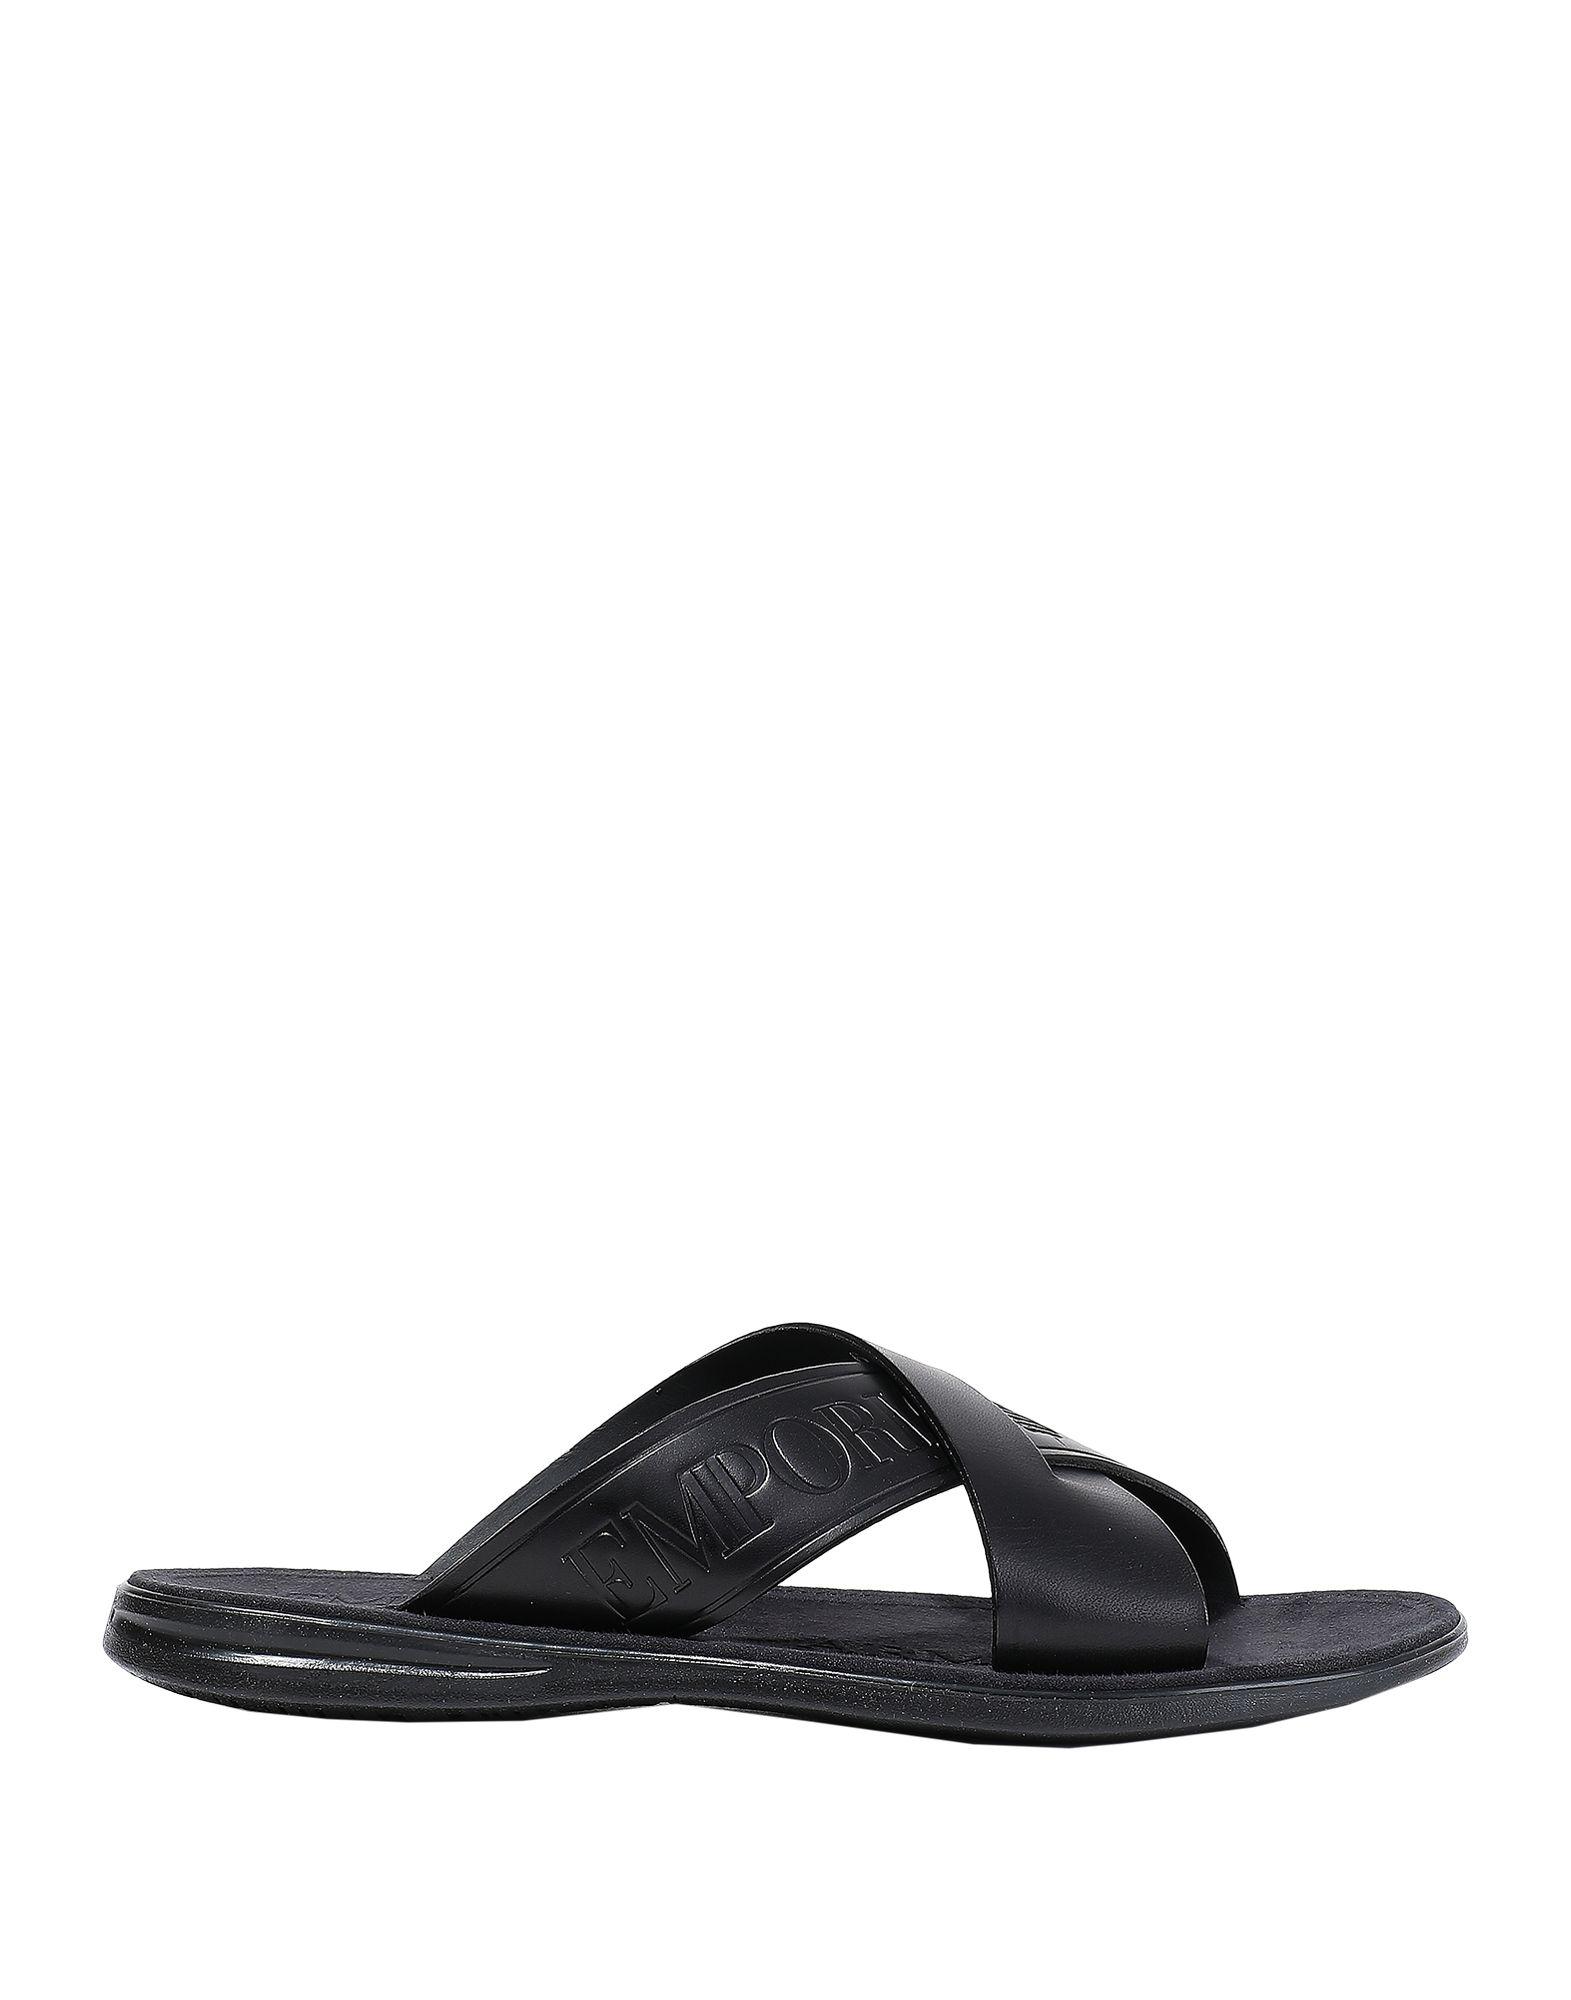 Emporio Armani Leather Sandals in Black for Men - Lyst